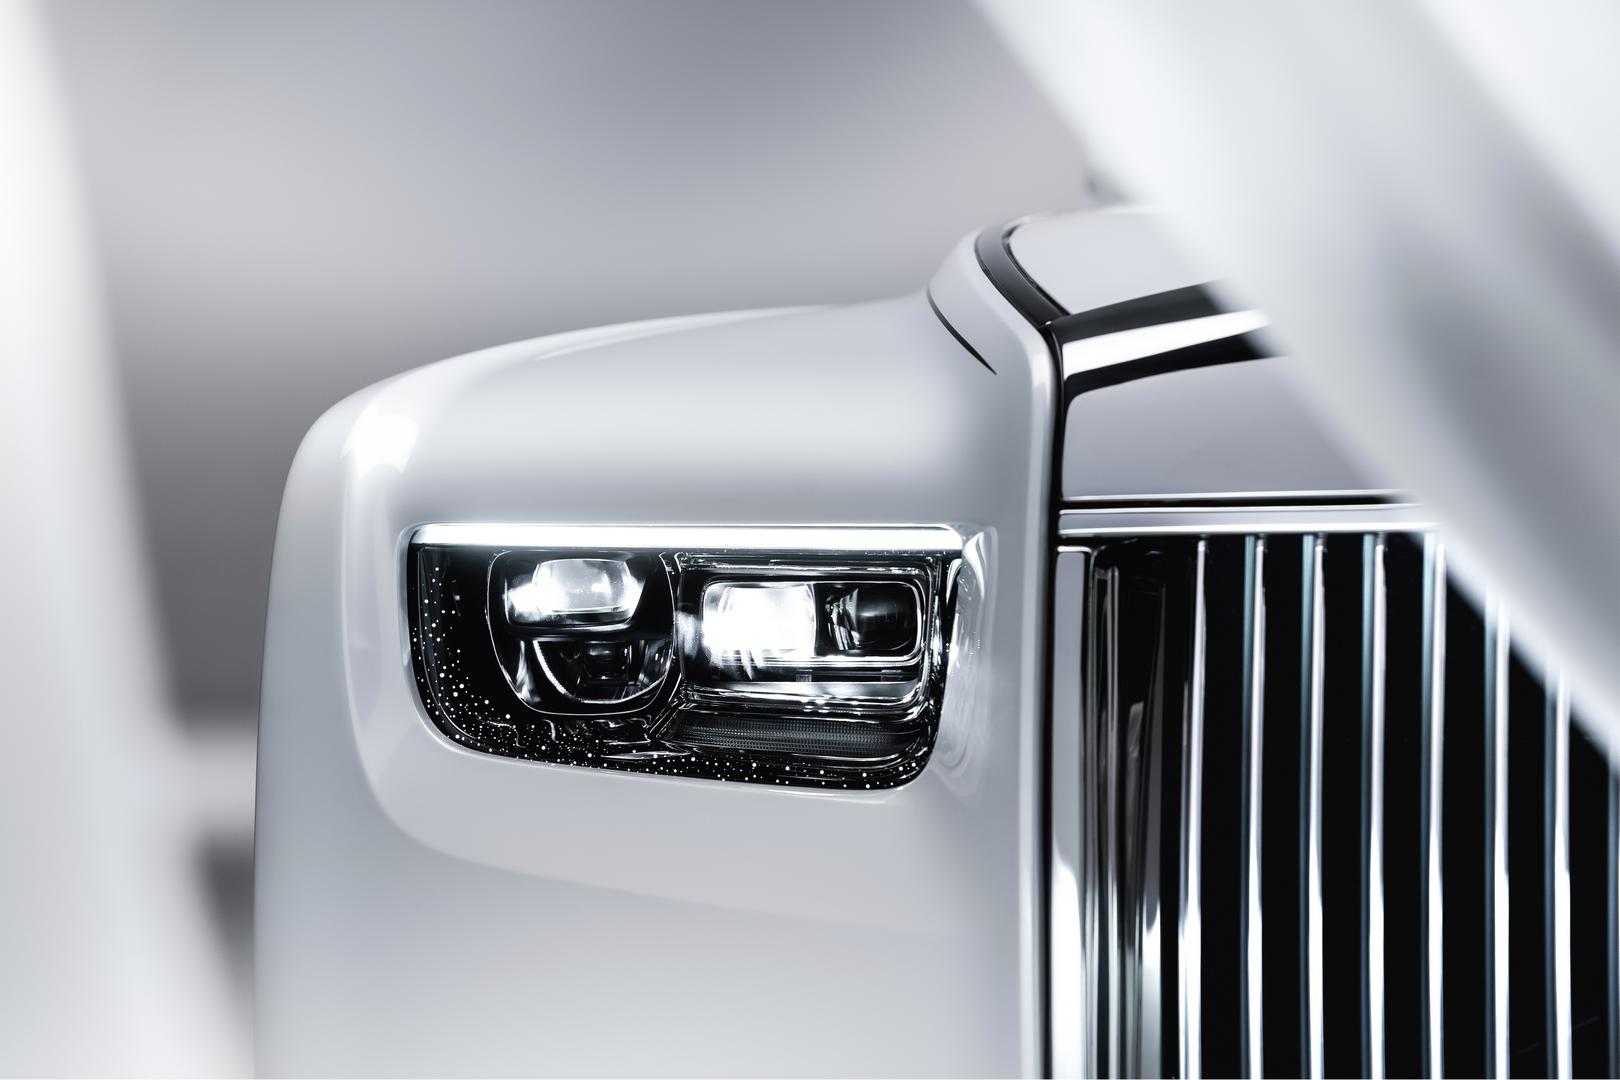 Rolls-Royce Phantom 8 headlight